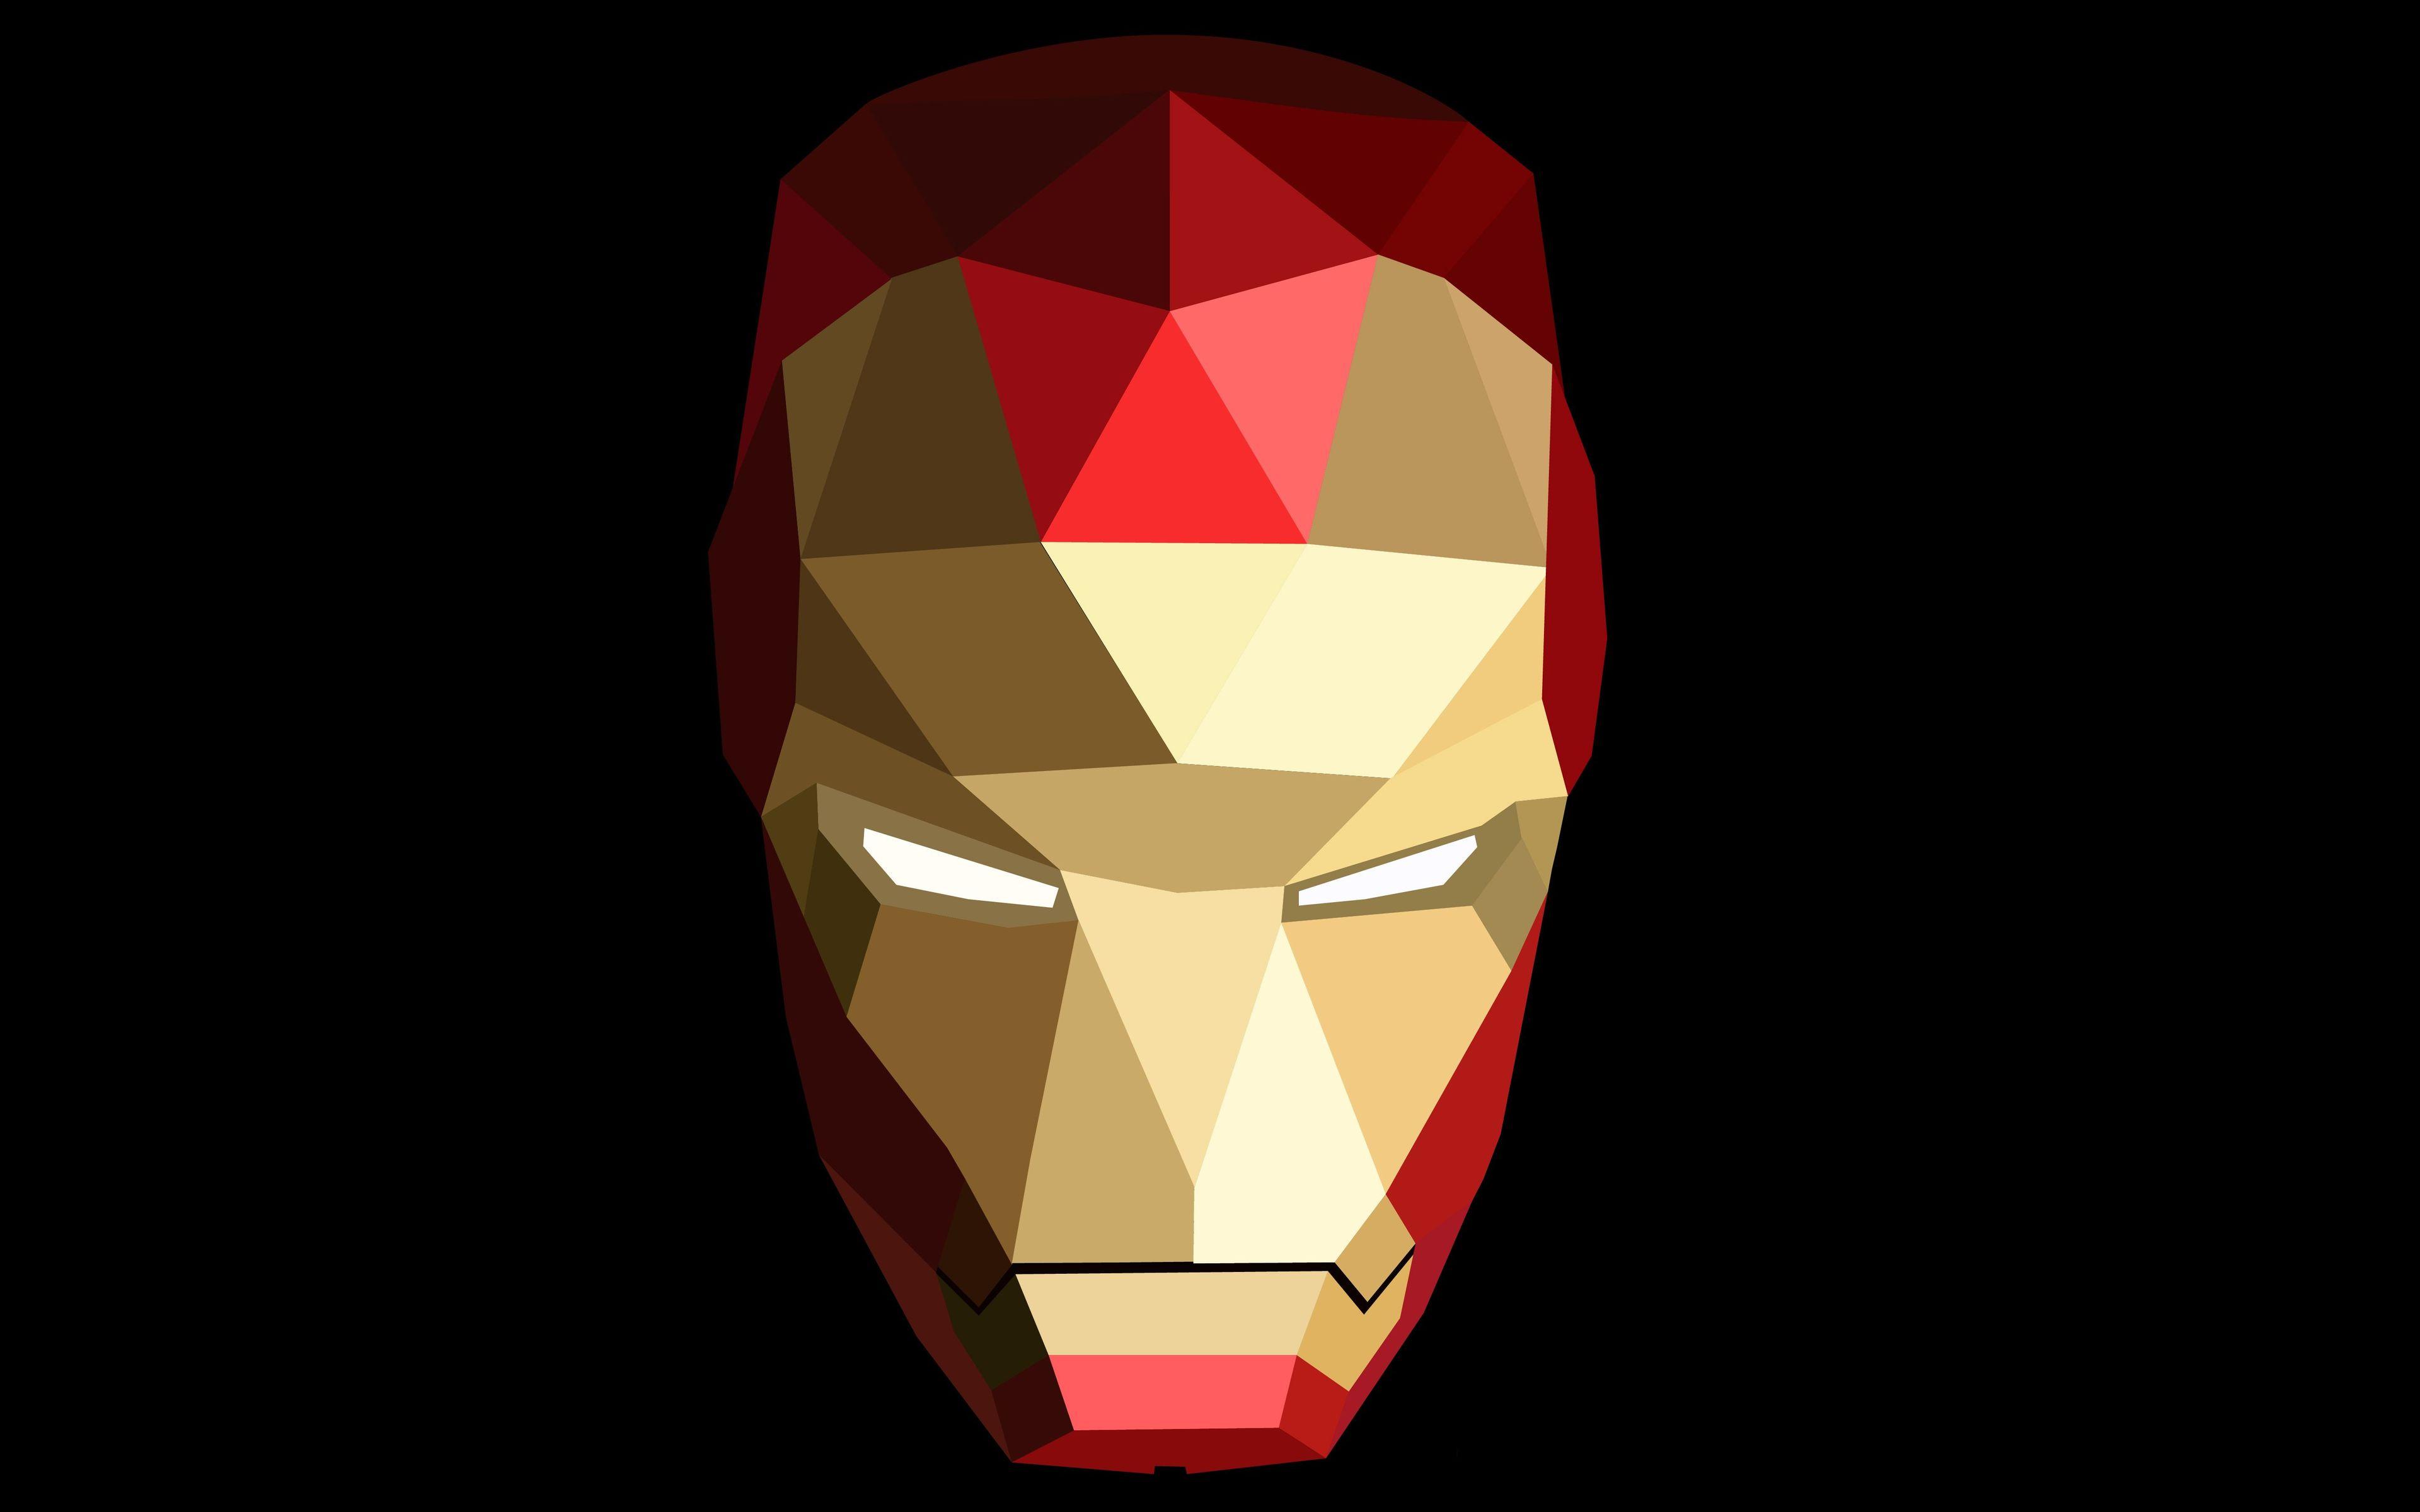 Download wallpaper 4k, Iron Man, minimal, superheroes, geometric